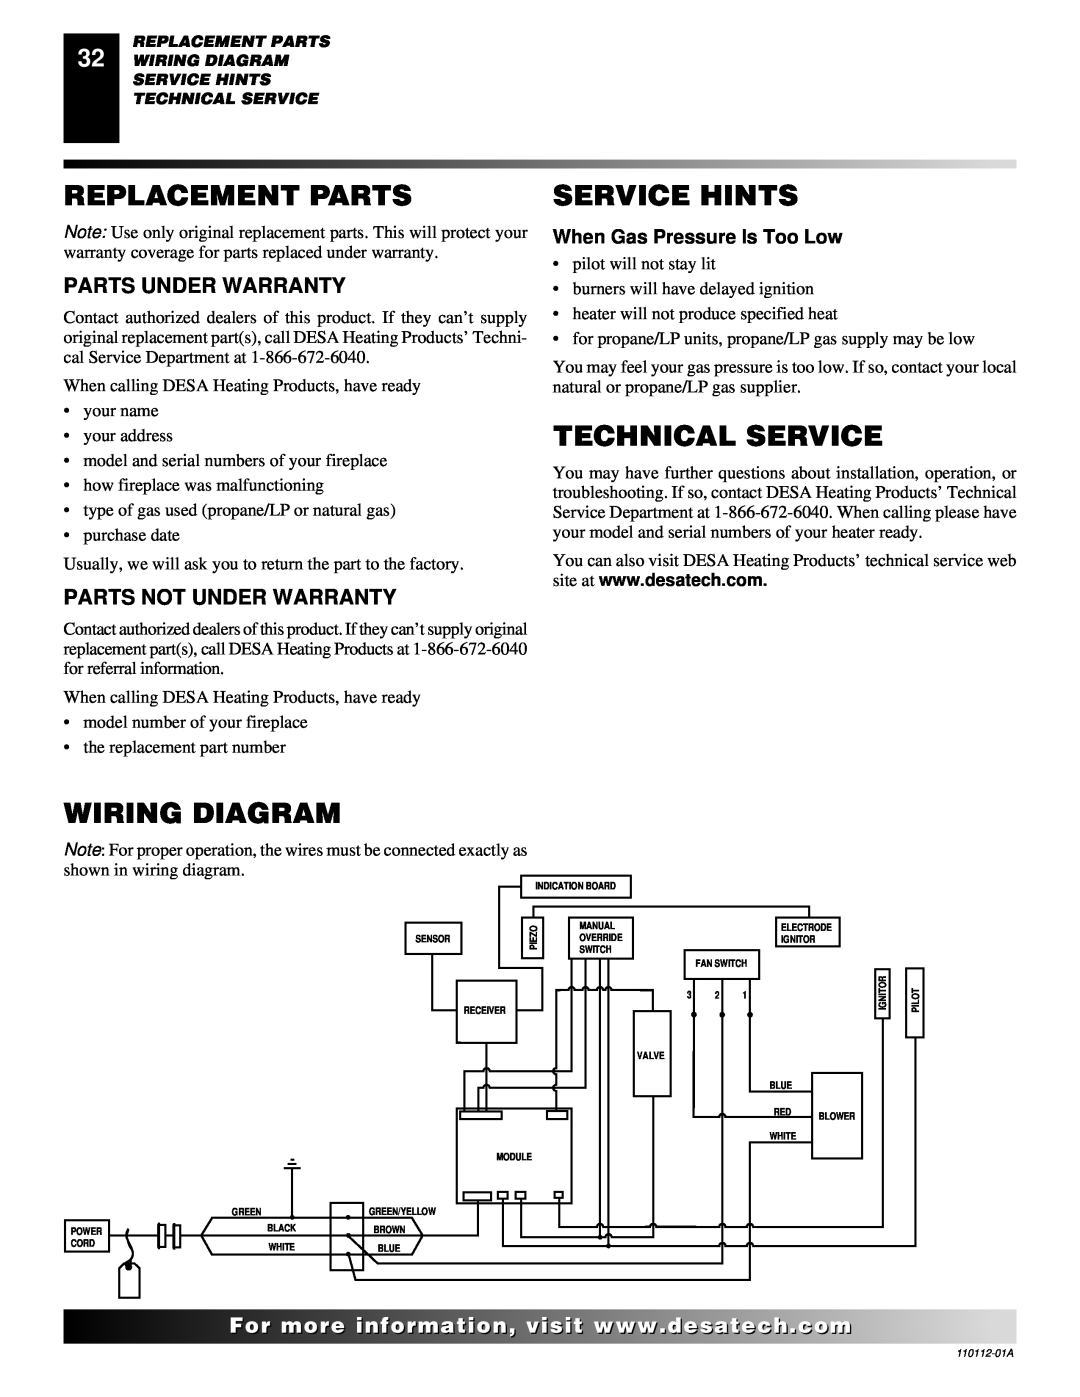 Desa VTGF33NRA Replacement Parts, Service Hints, Technical Service, Wiring Diagram, Parts Under Warranty, For..com 